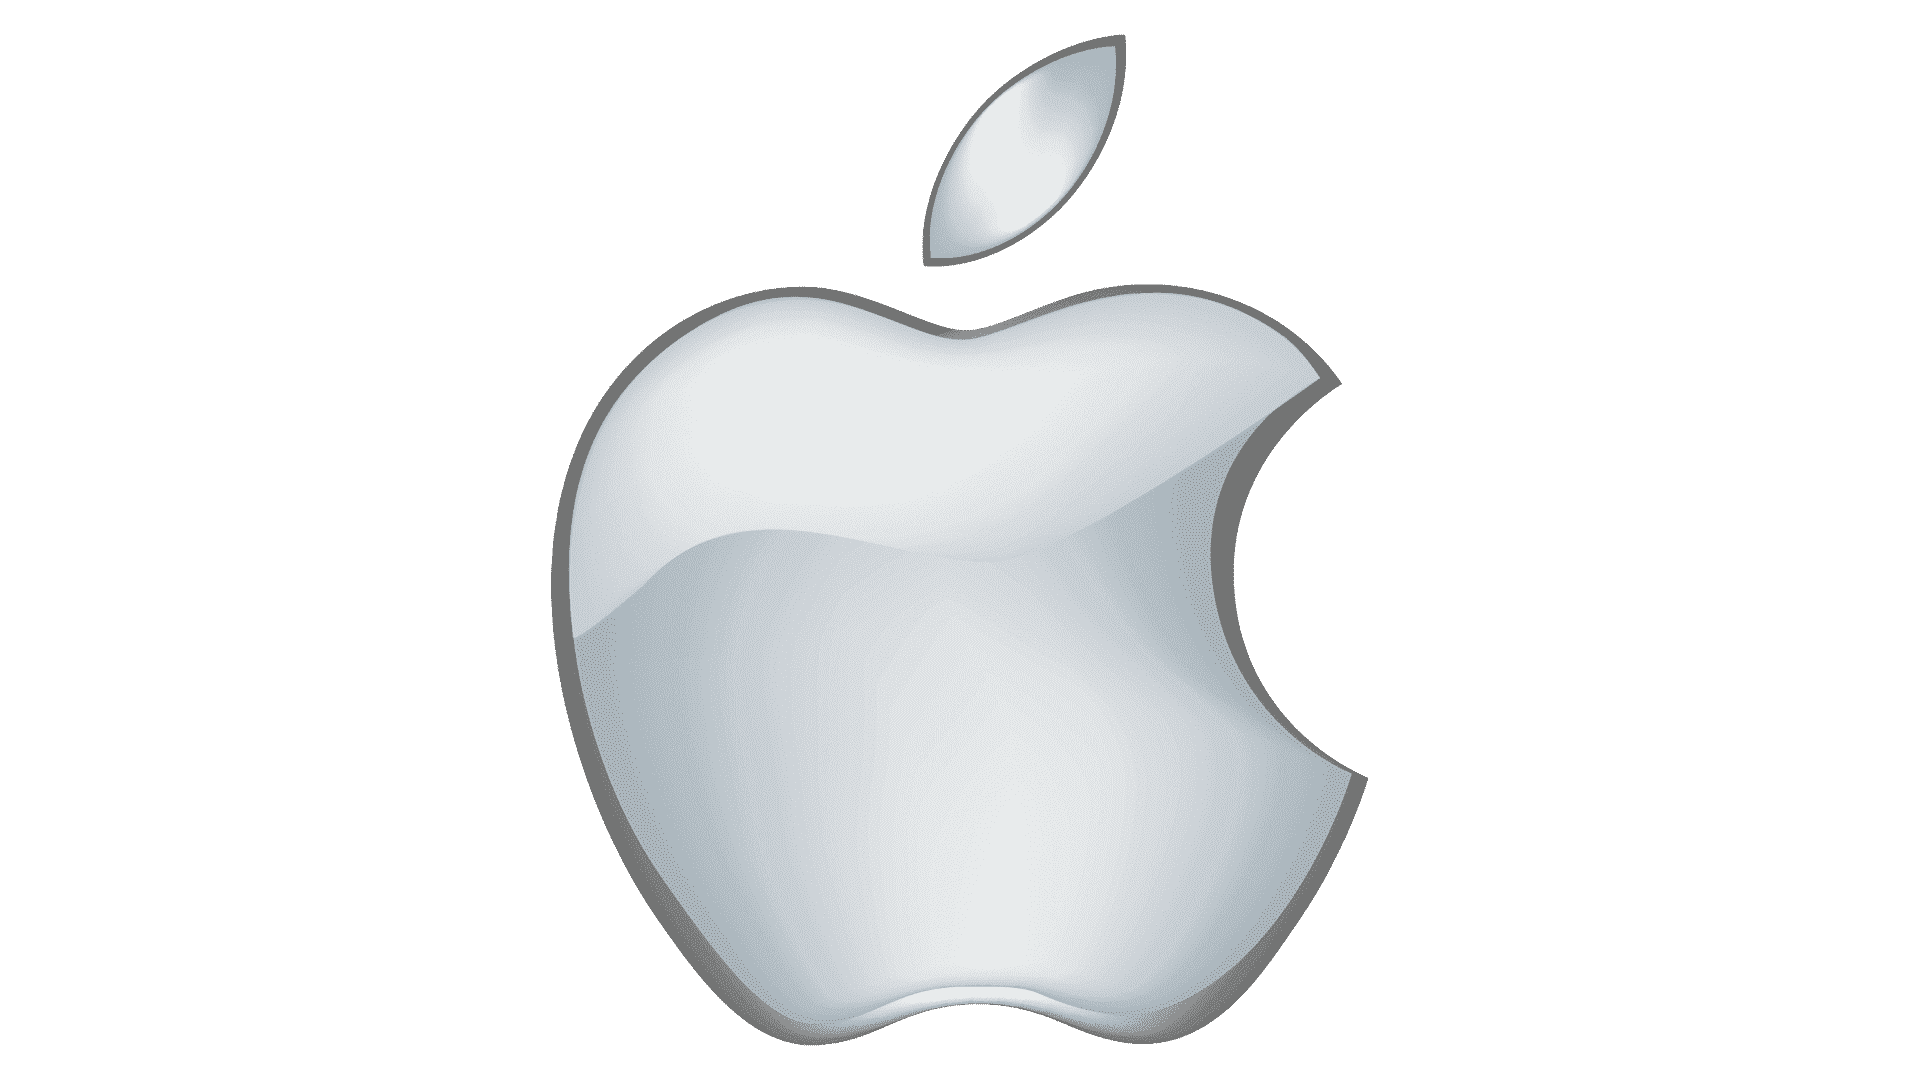 Apple Logo [Apple Computer] - SVG, PNG, AI, EPS Vectors SVG, PNG, AI ...